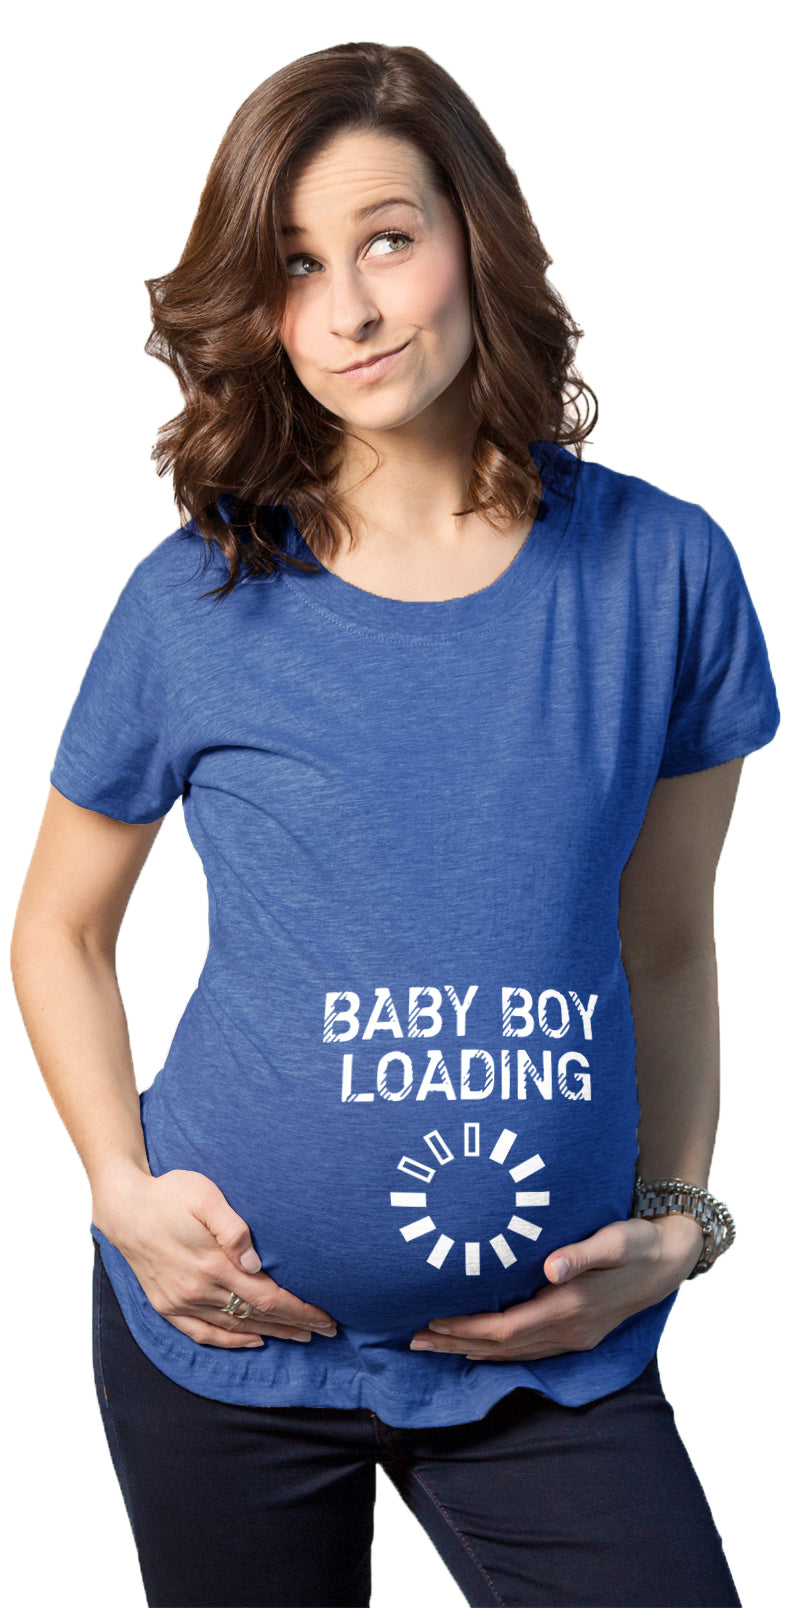 Funny Royal Baby Boy Loading Maternity T Shirt Nerdy Nerdy Tee